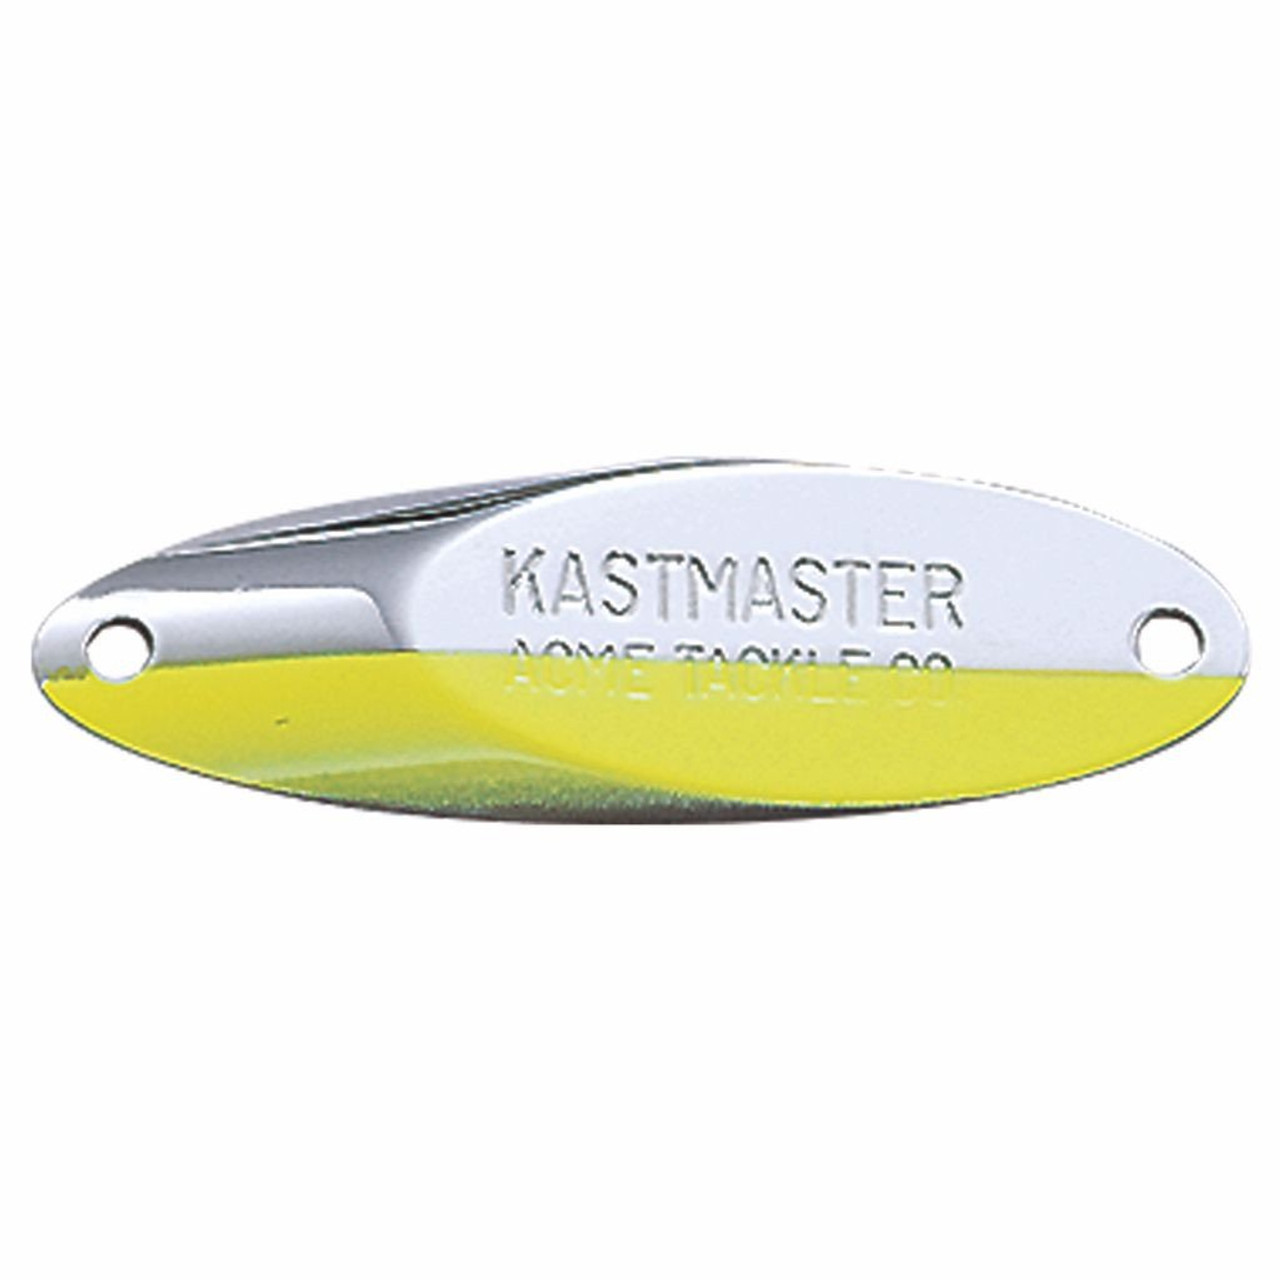 Acme Tackle Kastmaster Löffel – 1/12 OZ – Chrom-Chartreuse – FISH307.com